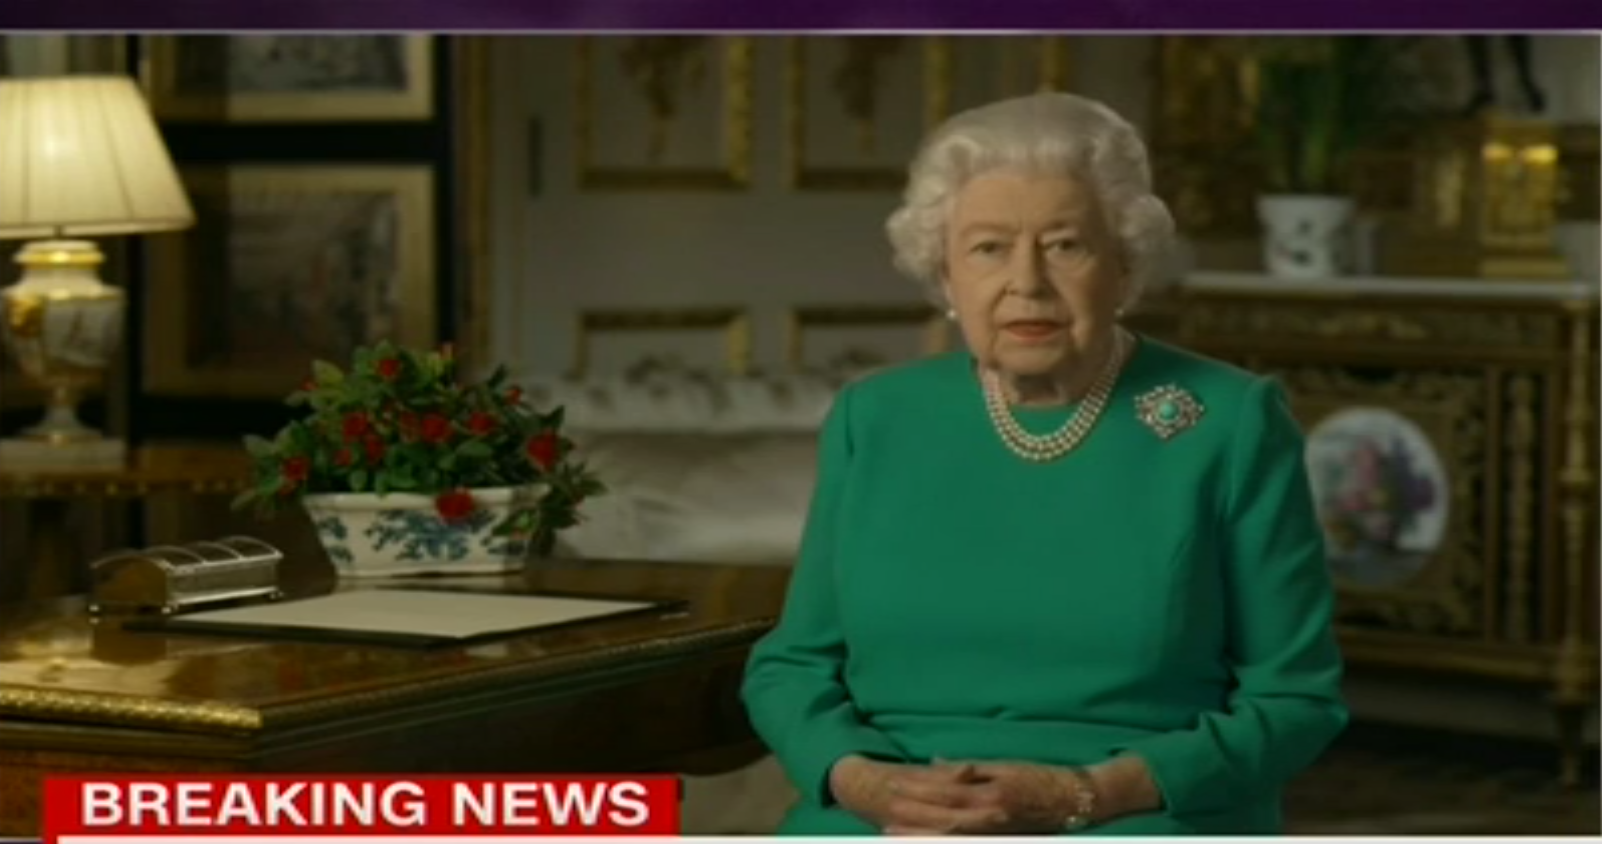 Queen's speech: Her Majesty issues historic coronavirus message 'We WILL meet again!'